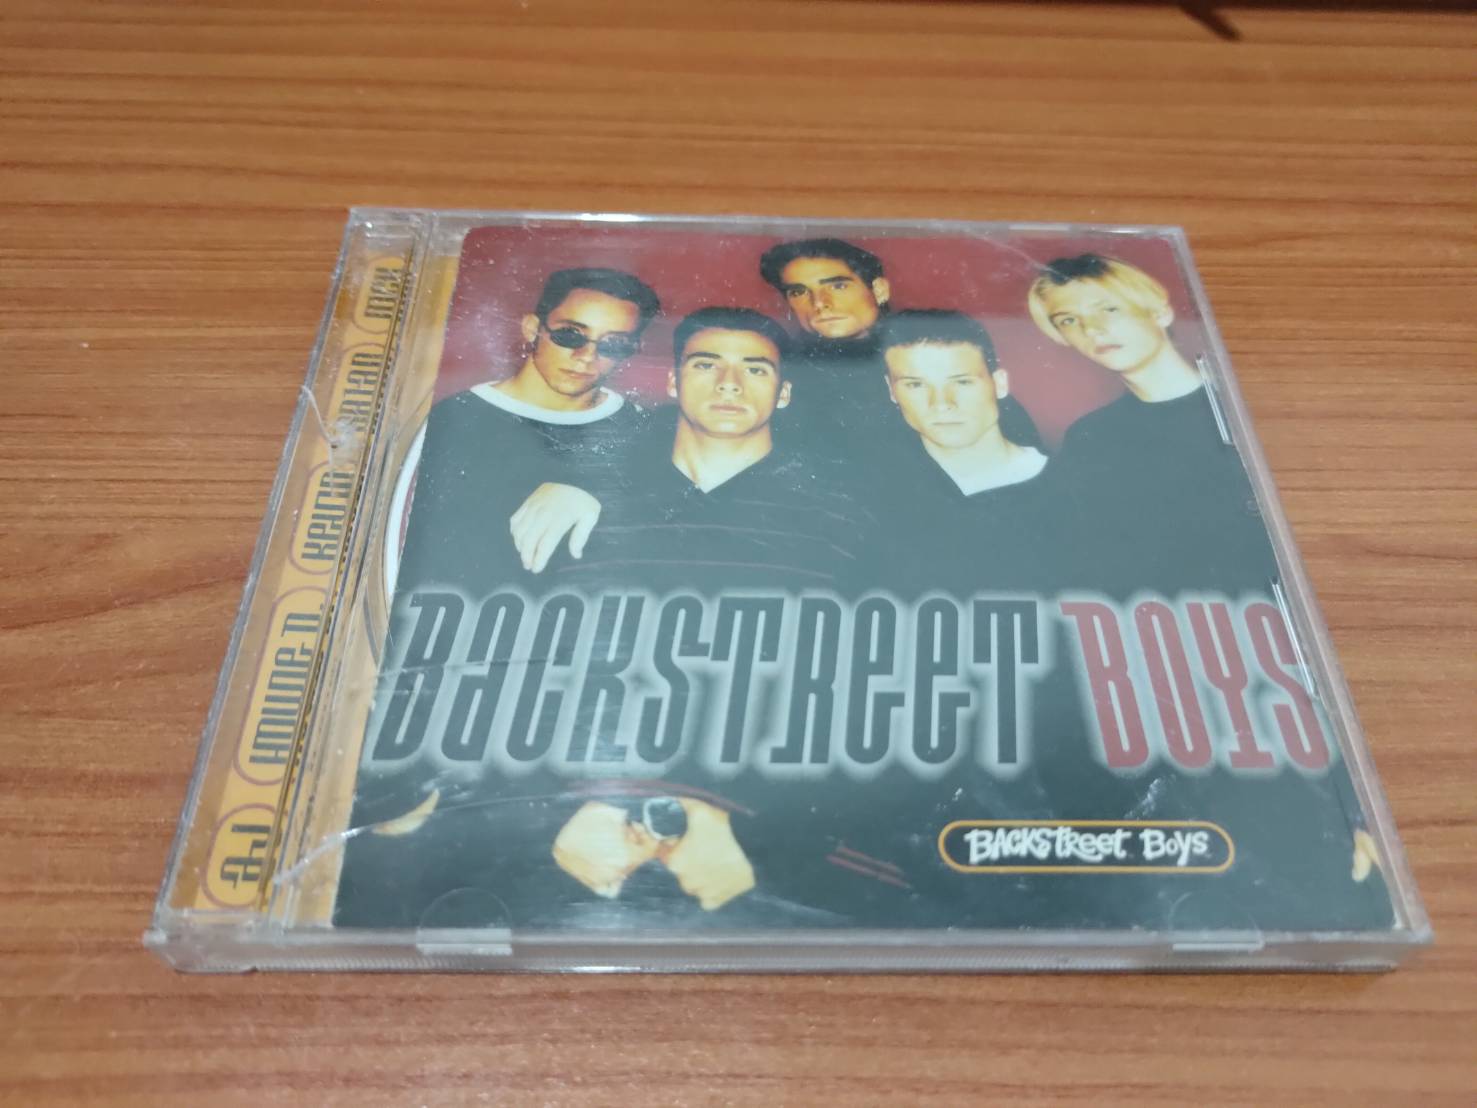 CD.MUSIC ซีดีเพลง เพลงสากล BOCKTREET BOYS